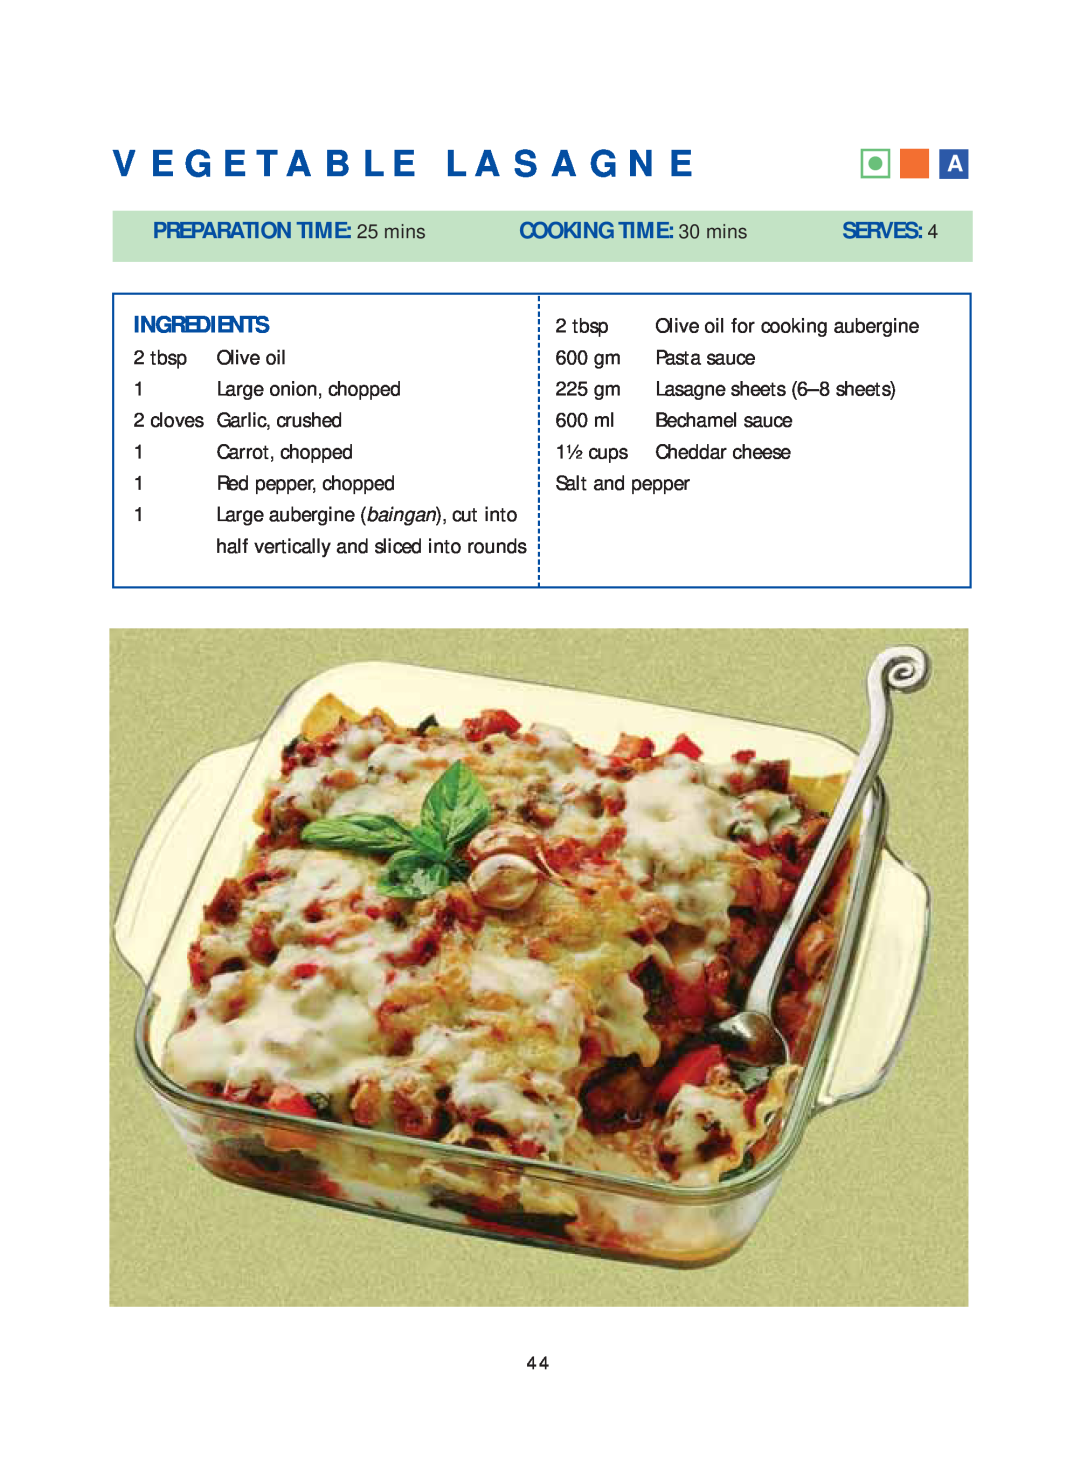 Samsung Microwave Oven warranty Vegetable Lasagne, PREPARATION TIME: 25 mins, COOKING TIME: 30 mins, Serves, Ingredients 